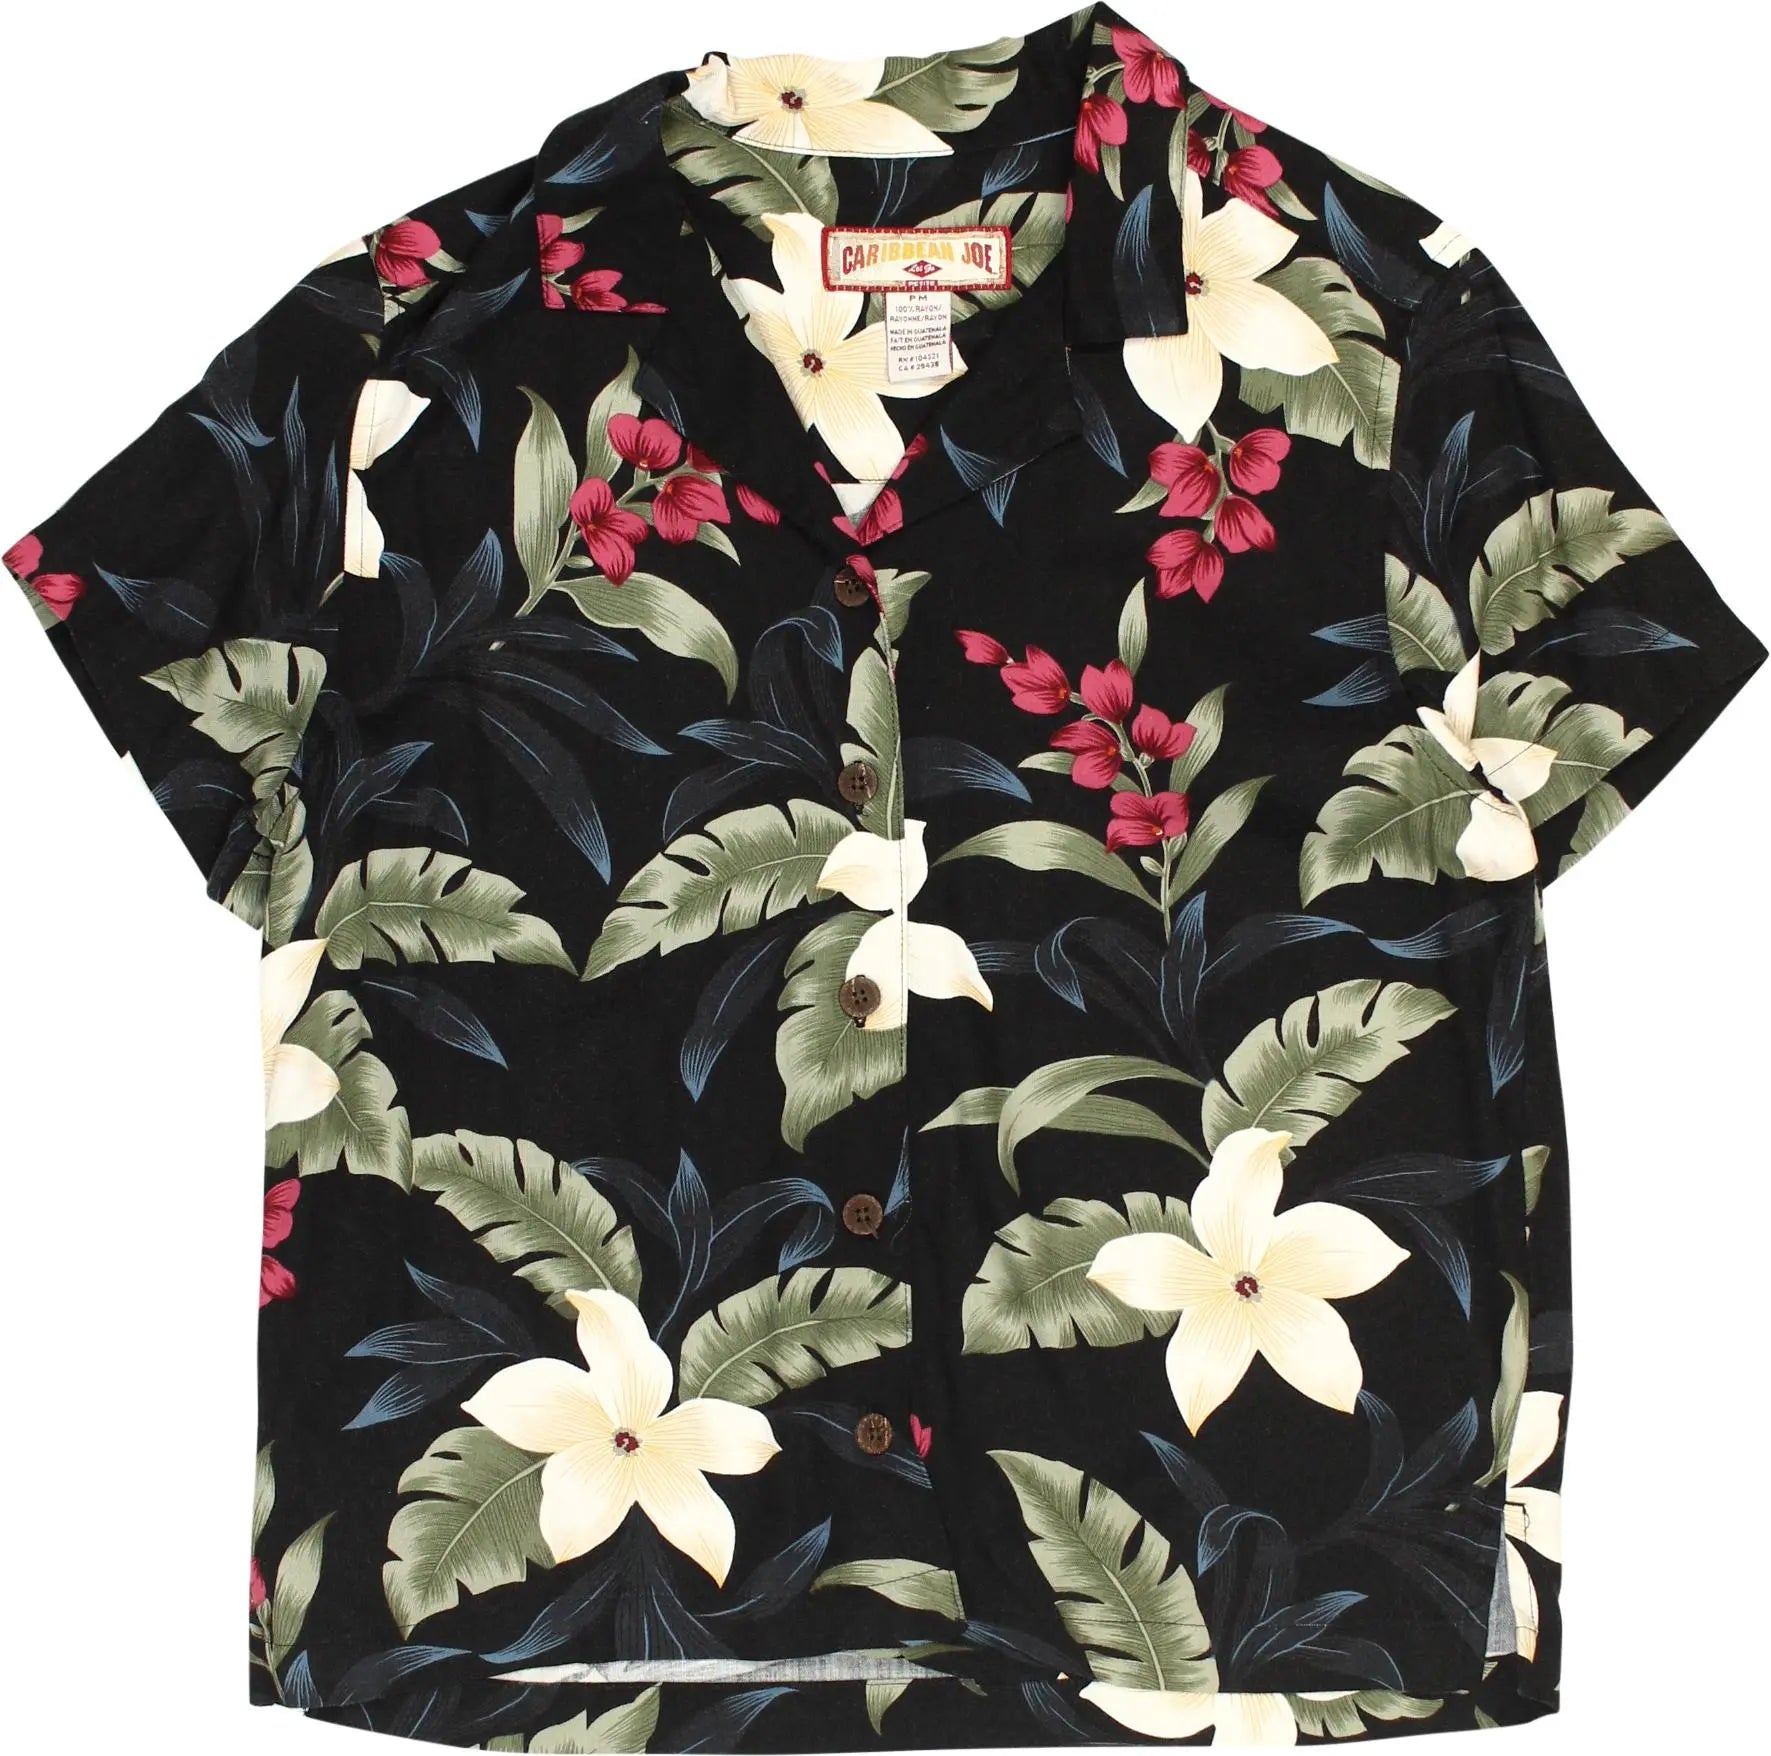 Carribean Joe - 90s Hawaiian Shirt- ThriftTale.com - Vintage and second handclothing